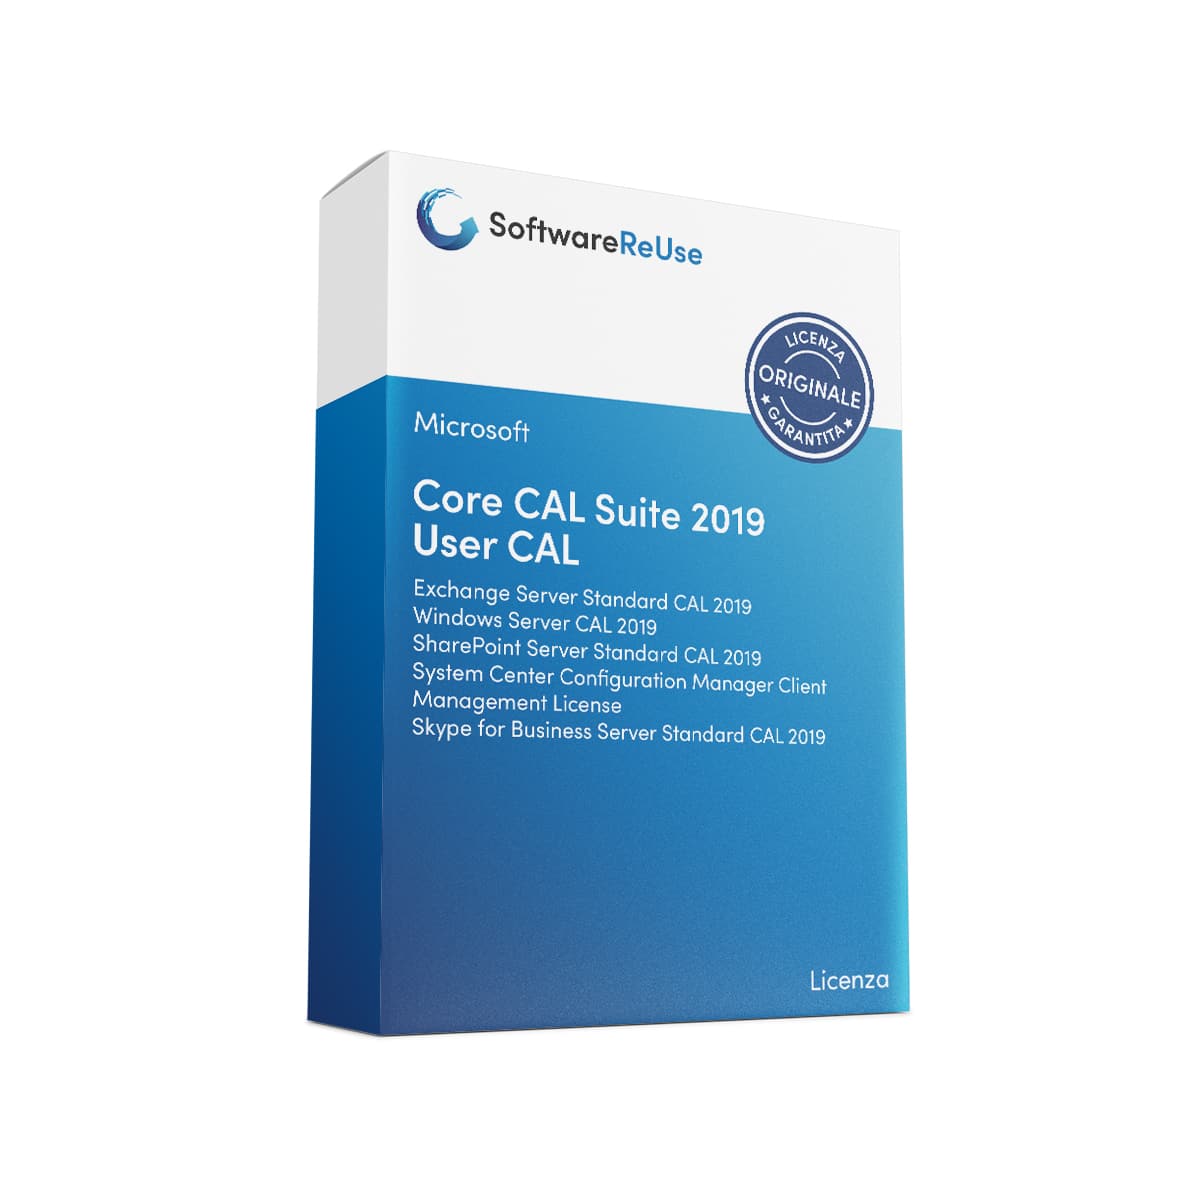 Core CAL Suite 2019 User CAL IT